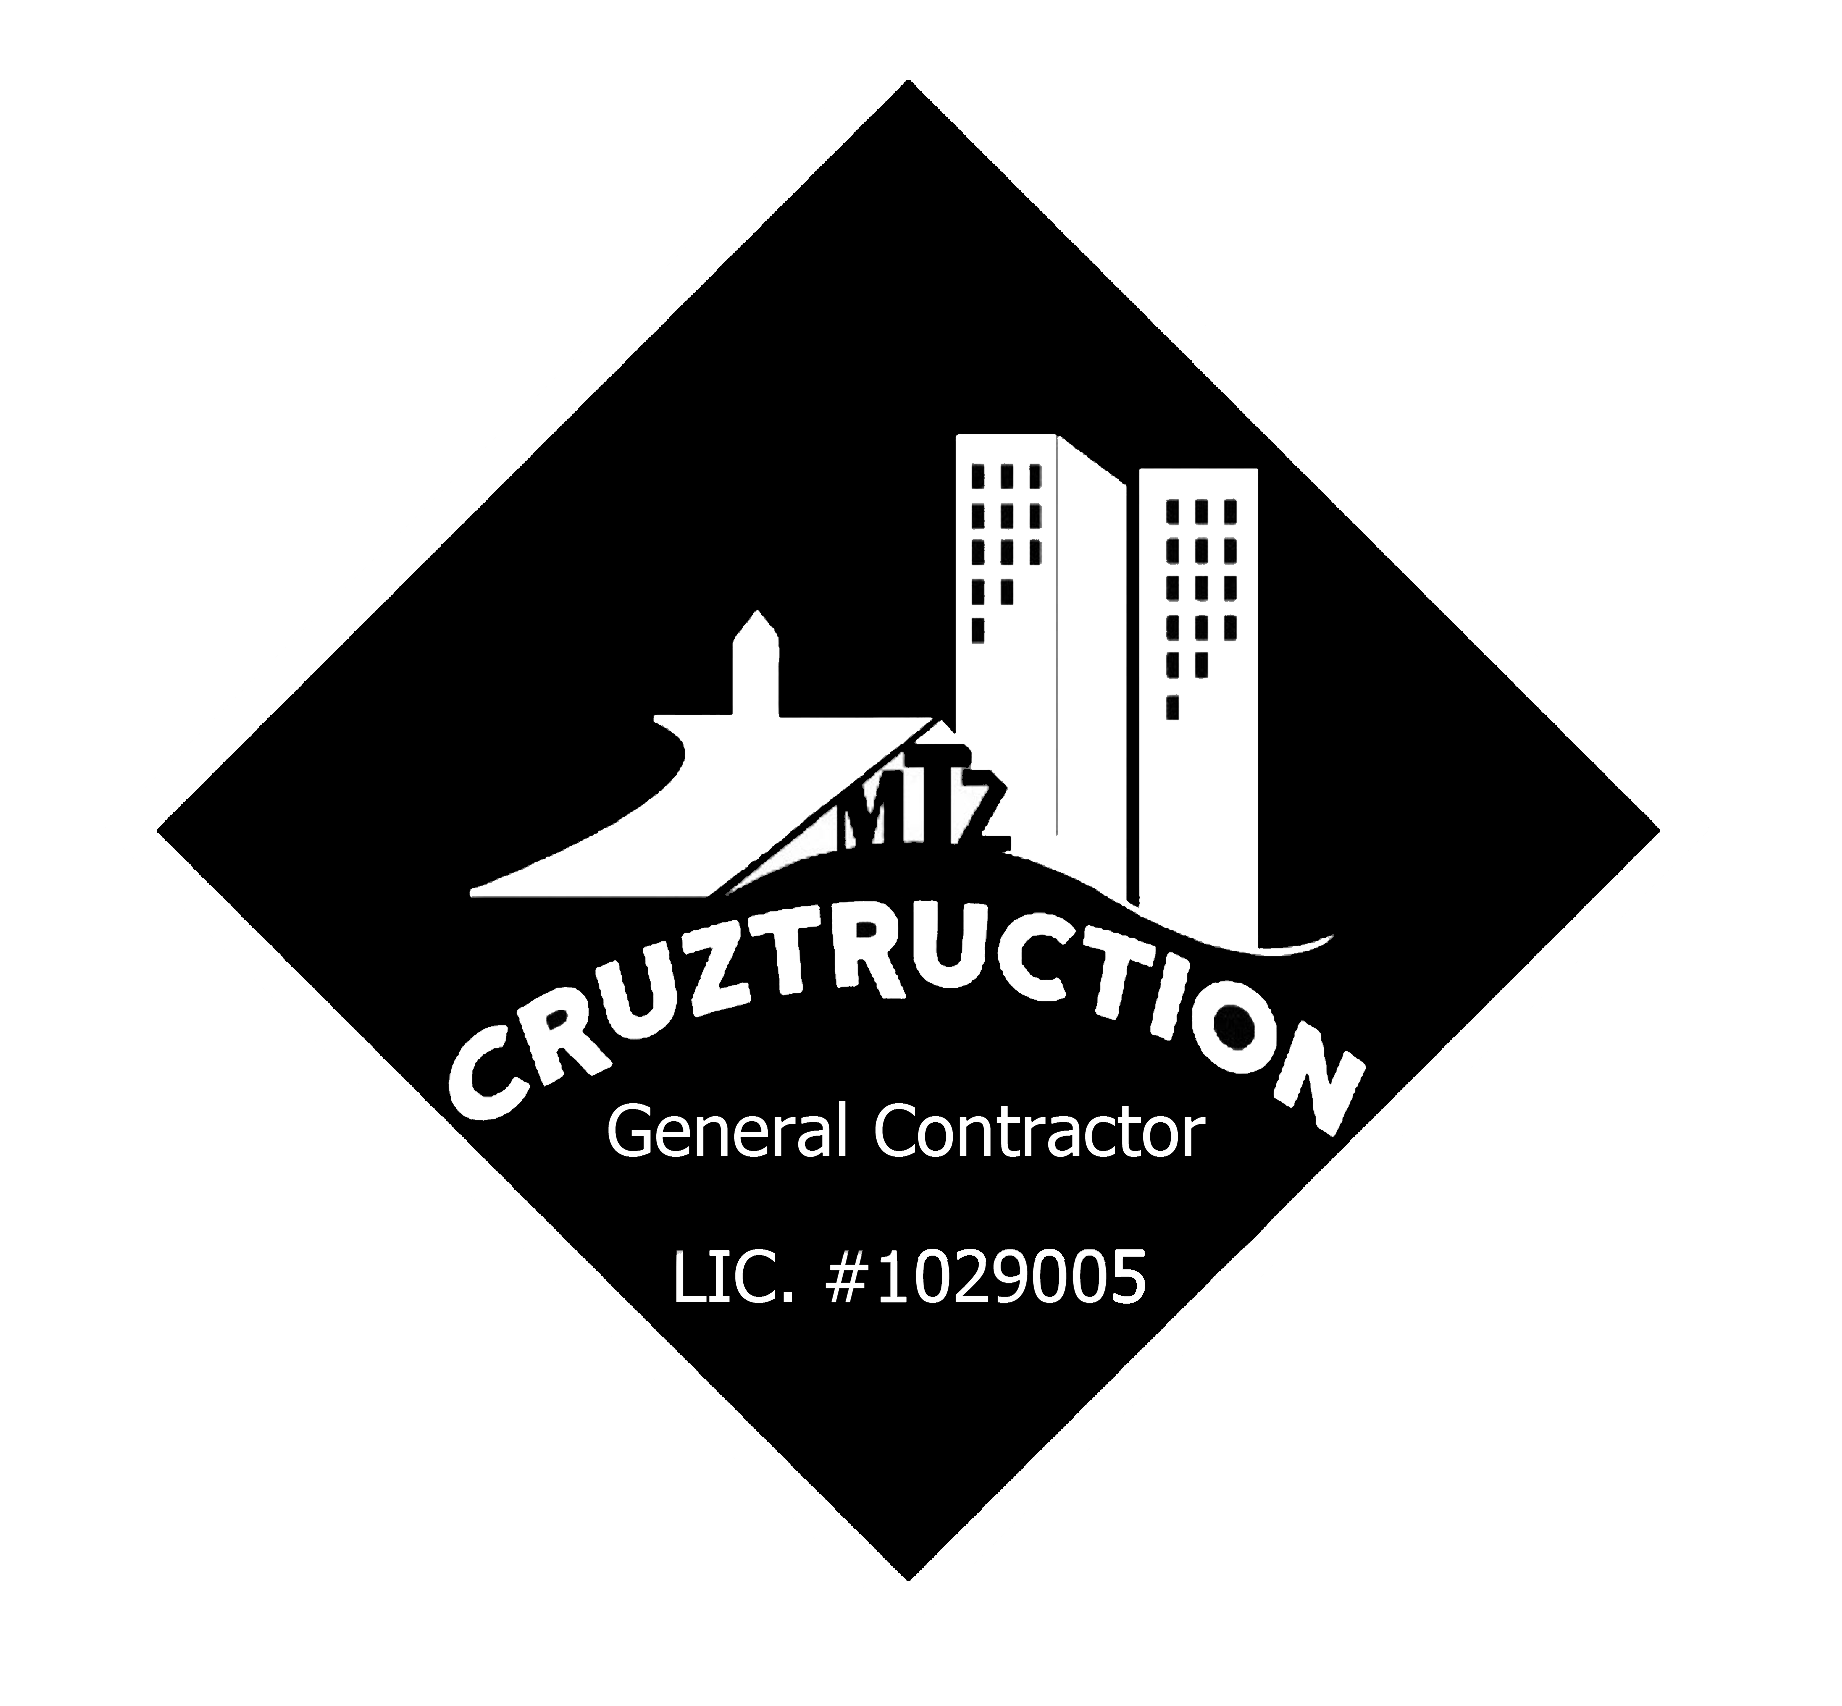 MTZ Cruztruction logo